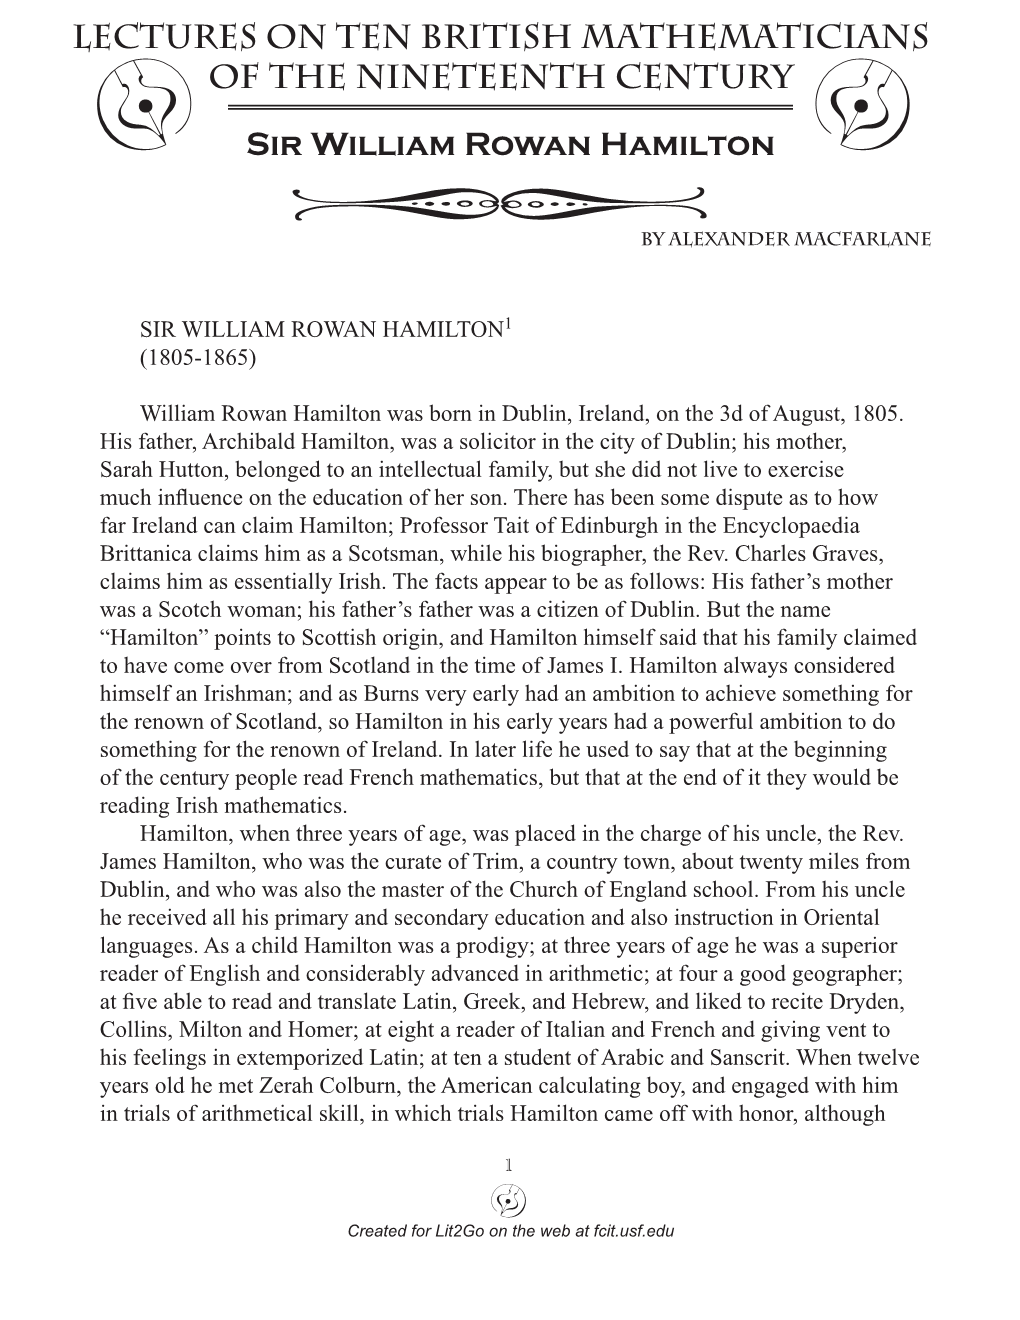 SIR WILLIAM ROWAN HAMILTON1 (1805-1865) William Rowan